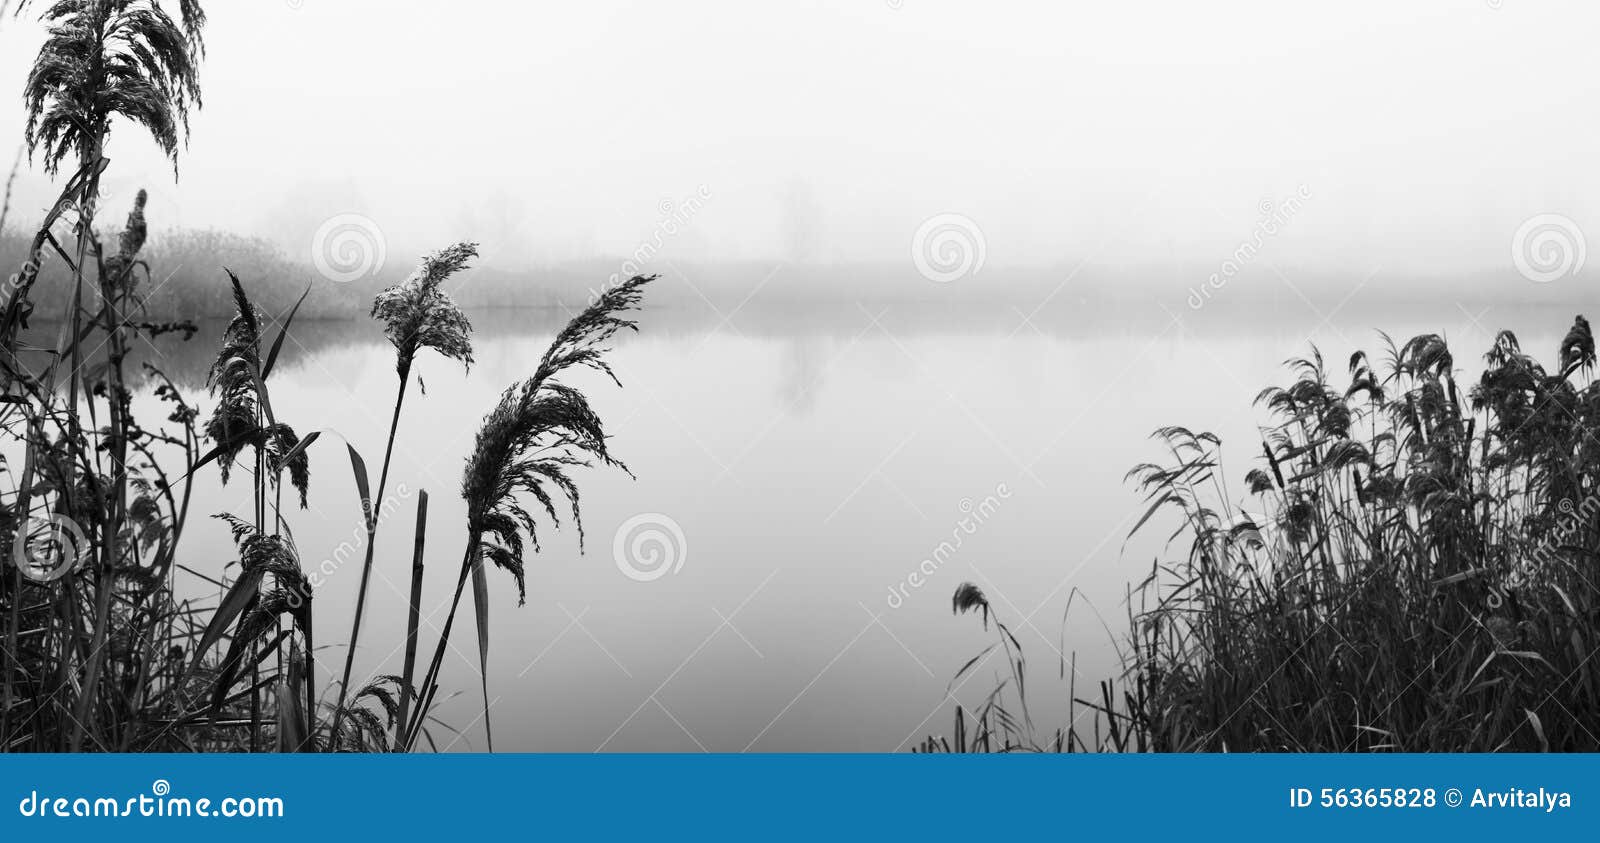 Reeds on river Bank stock photo. Image of trees, seasonblack - 56365828